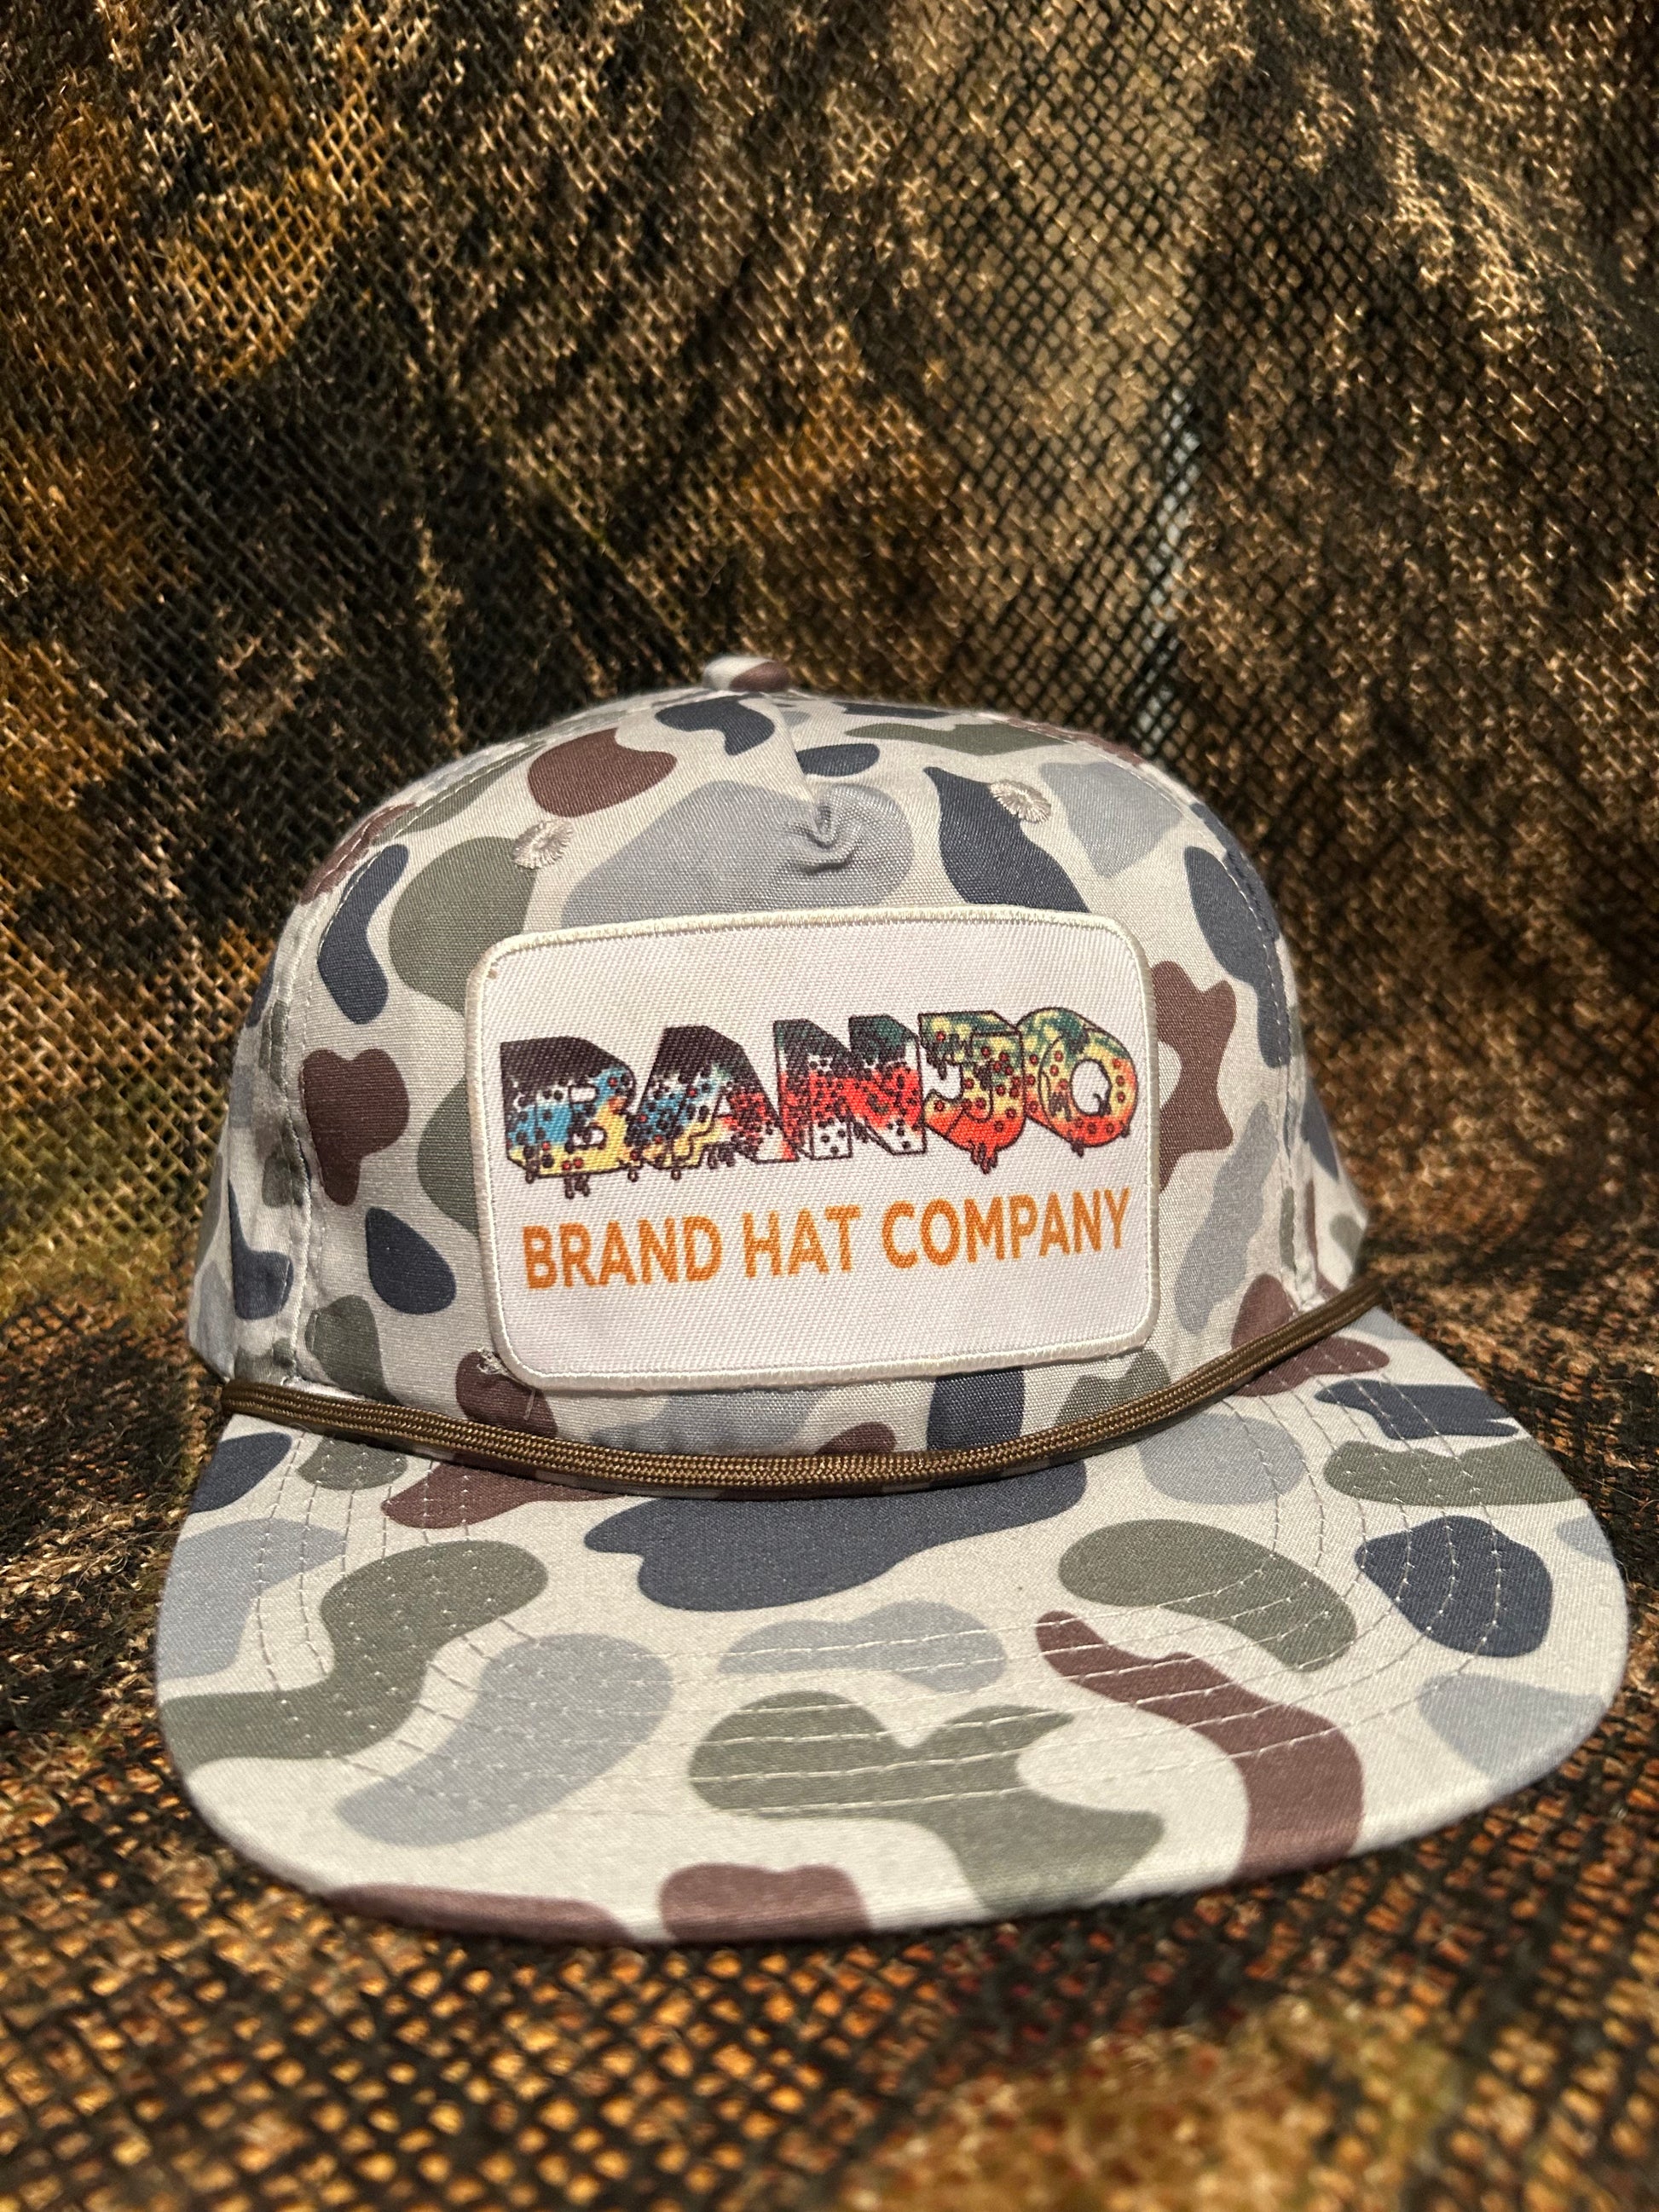 Banjo Brand Trout fishing Camo ropebrim SnapBack hat – BANJO BRAND HAT CO.